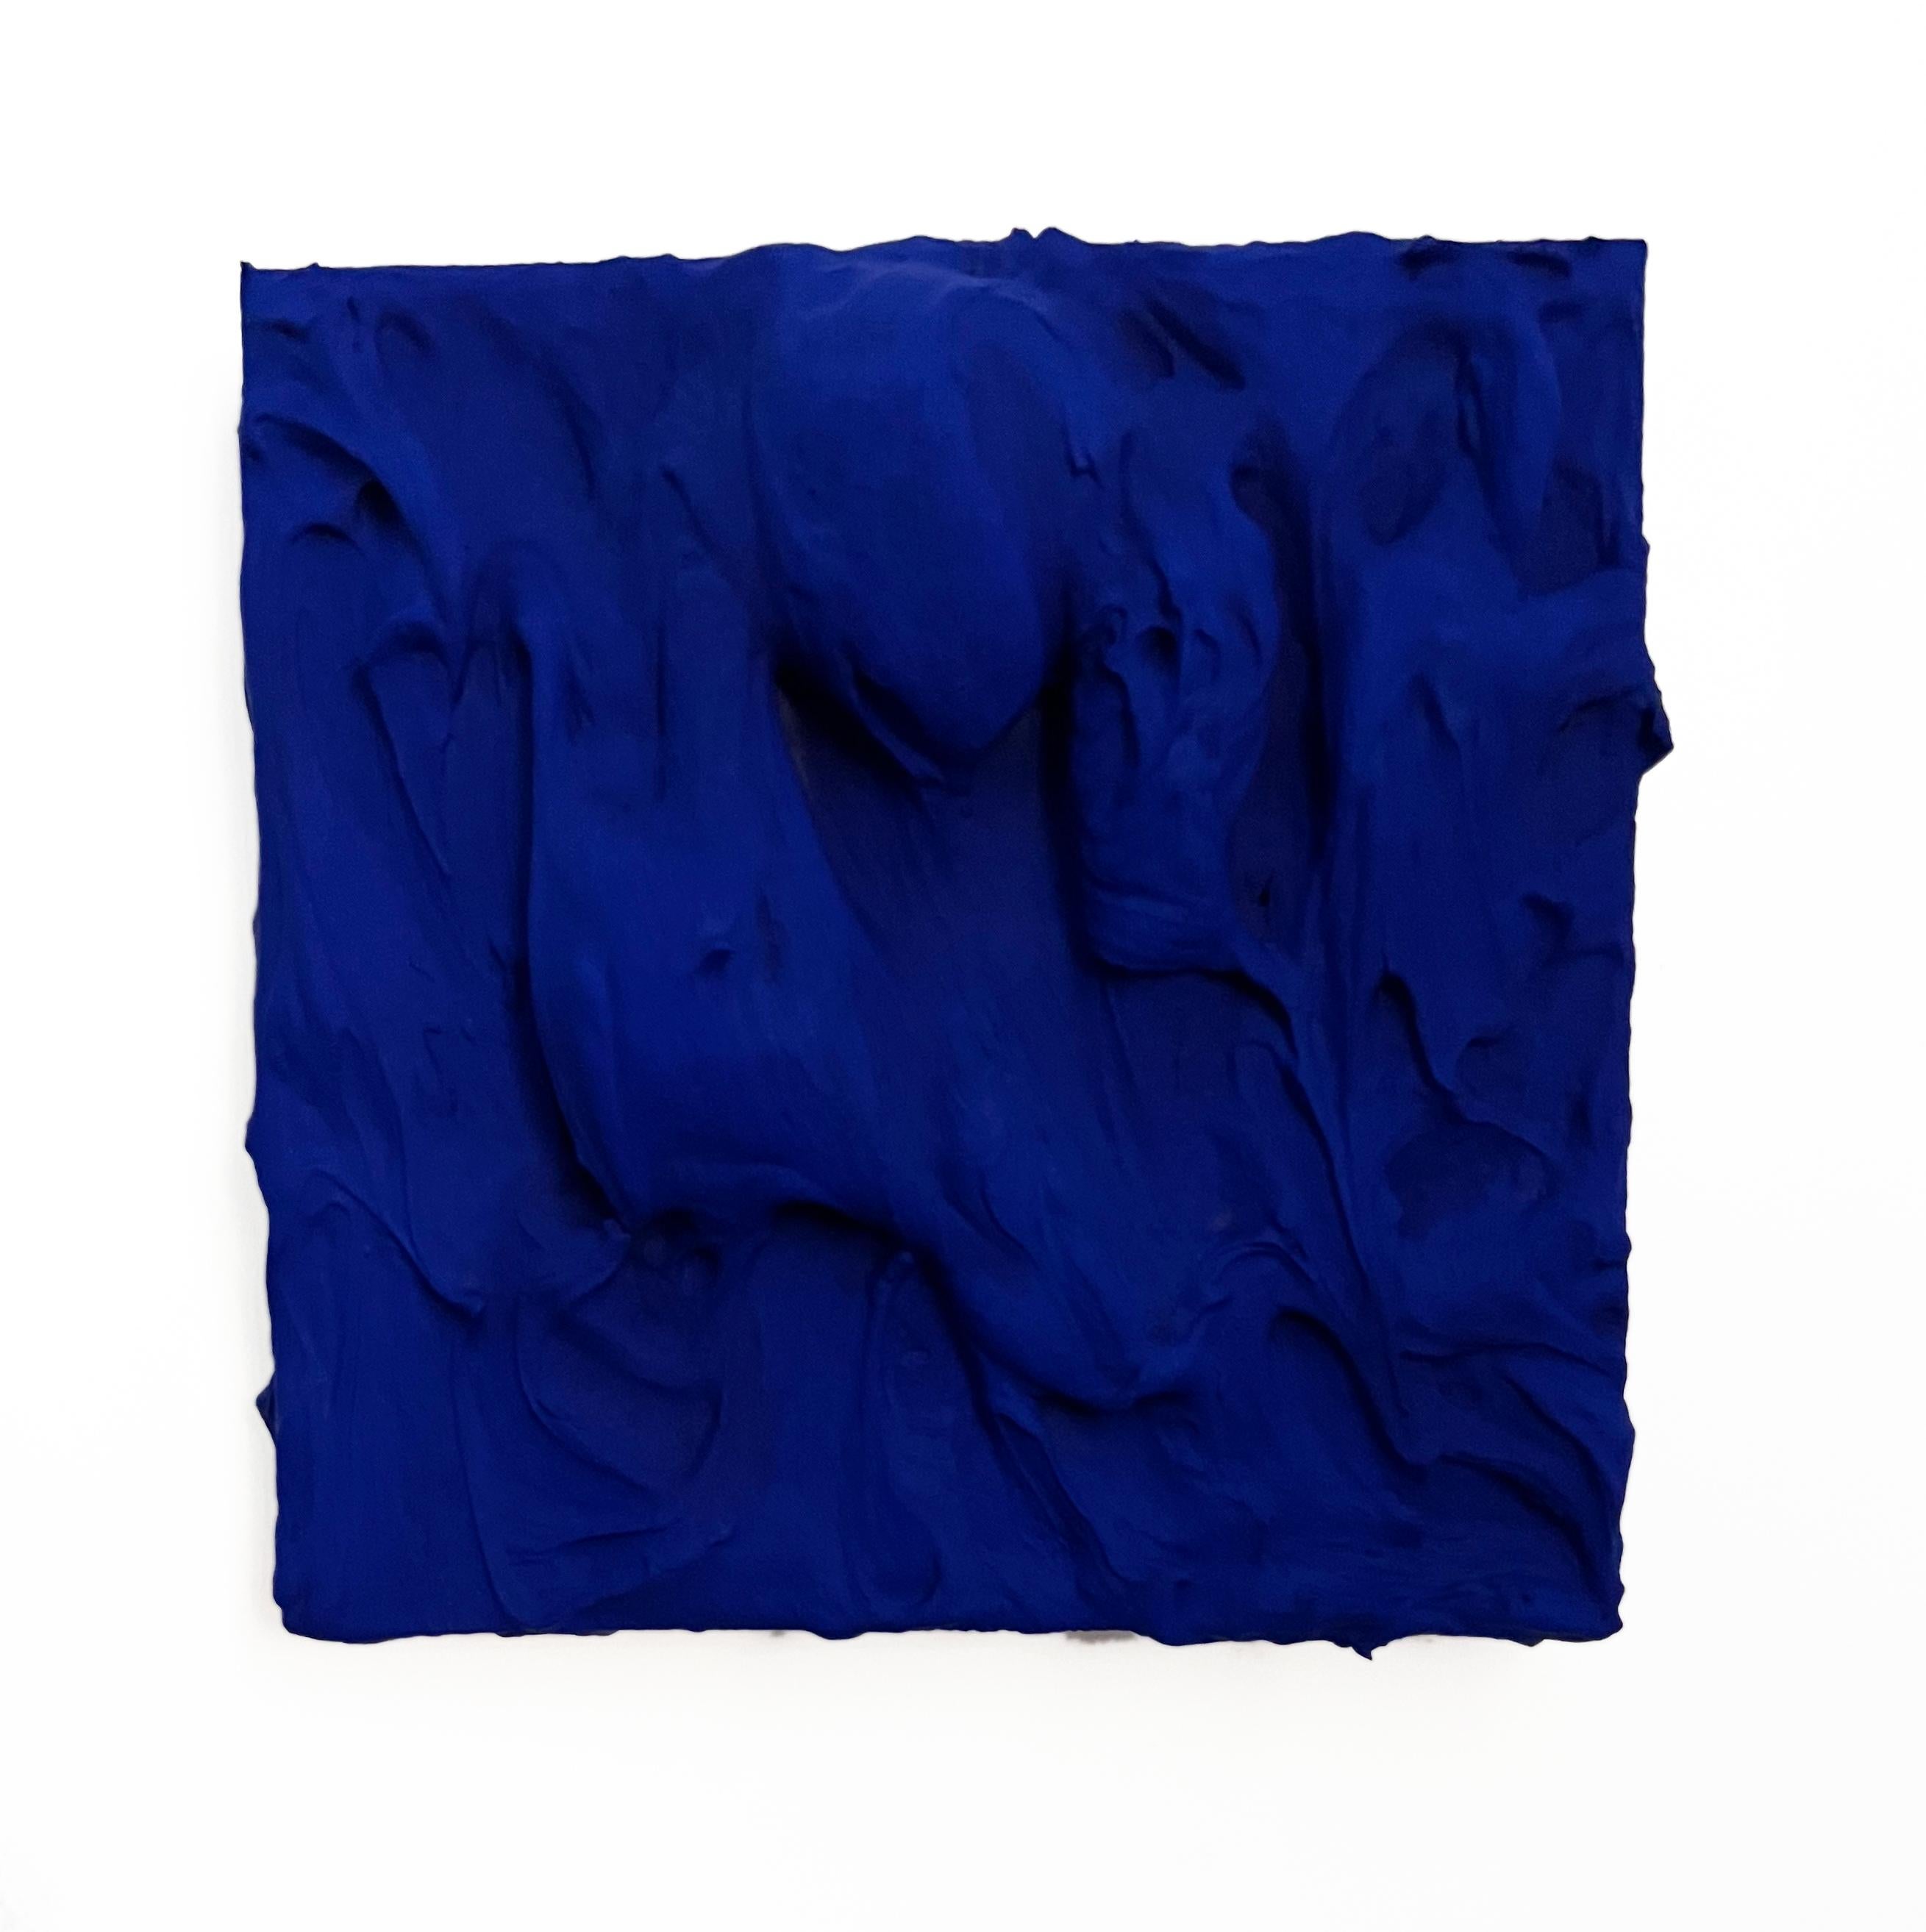 Ultra Blue Excess (thick impasto painting monochrome Pop-Art quadratisches Design)